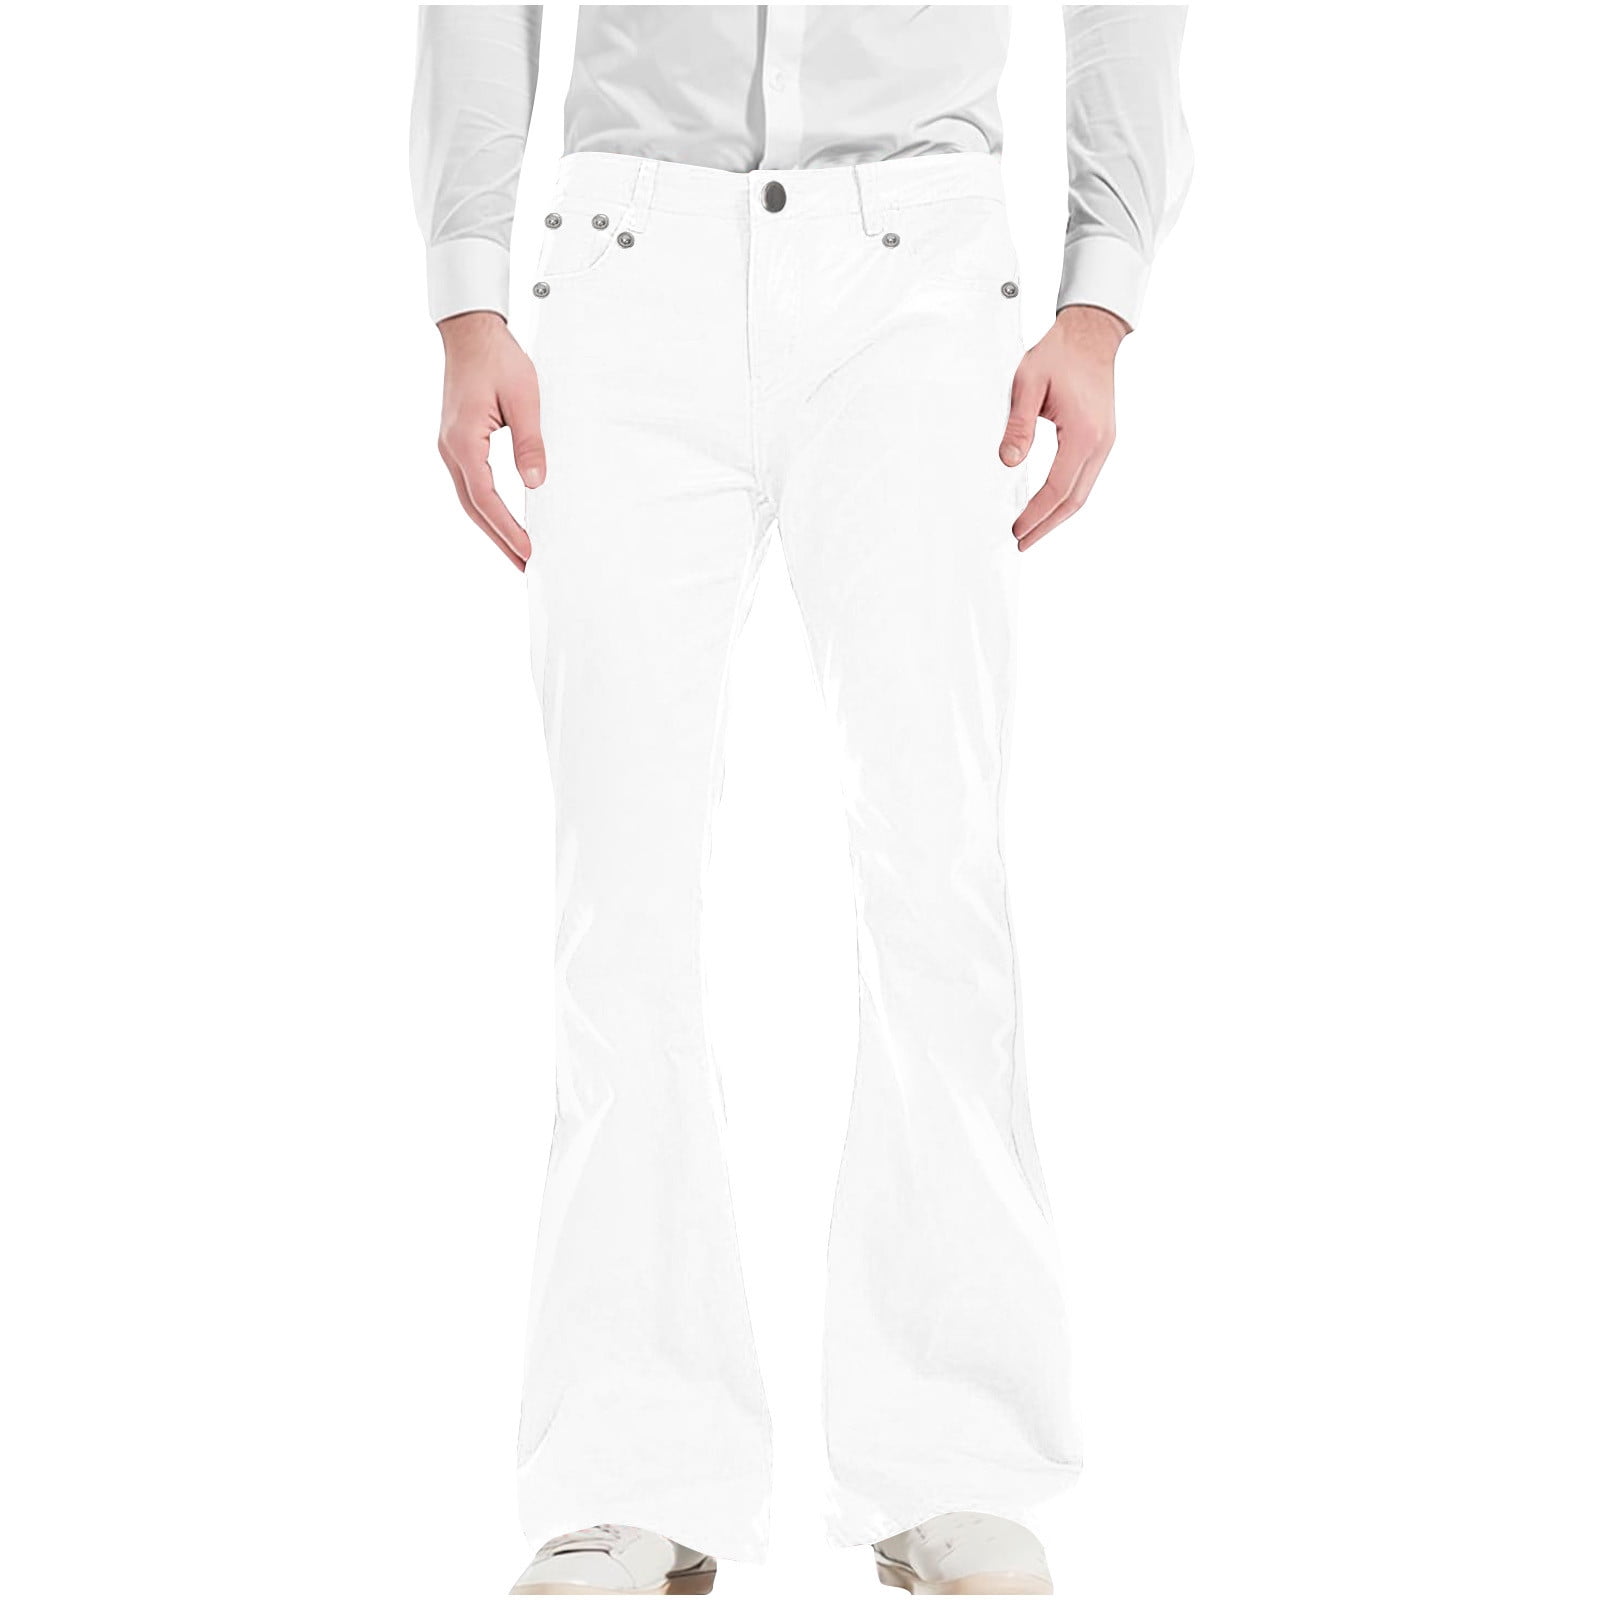 Men Formal Bell Bottom Pants Retro 60s 70s Flared Fit Dress Trousers Casual  Slim | eBay